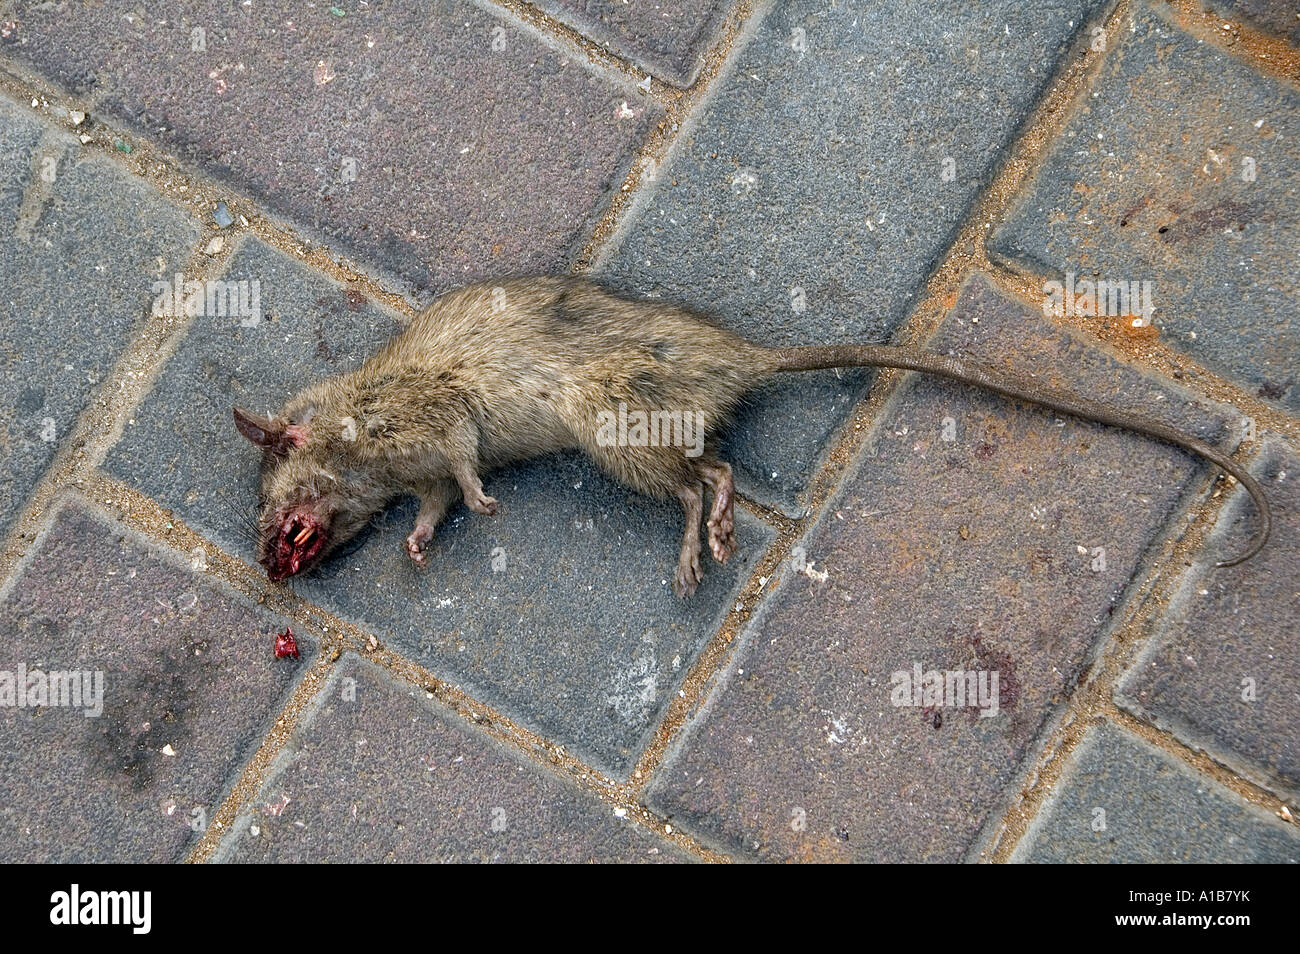 Dead rat on pavement Stock Photo